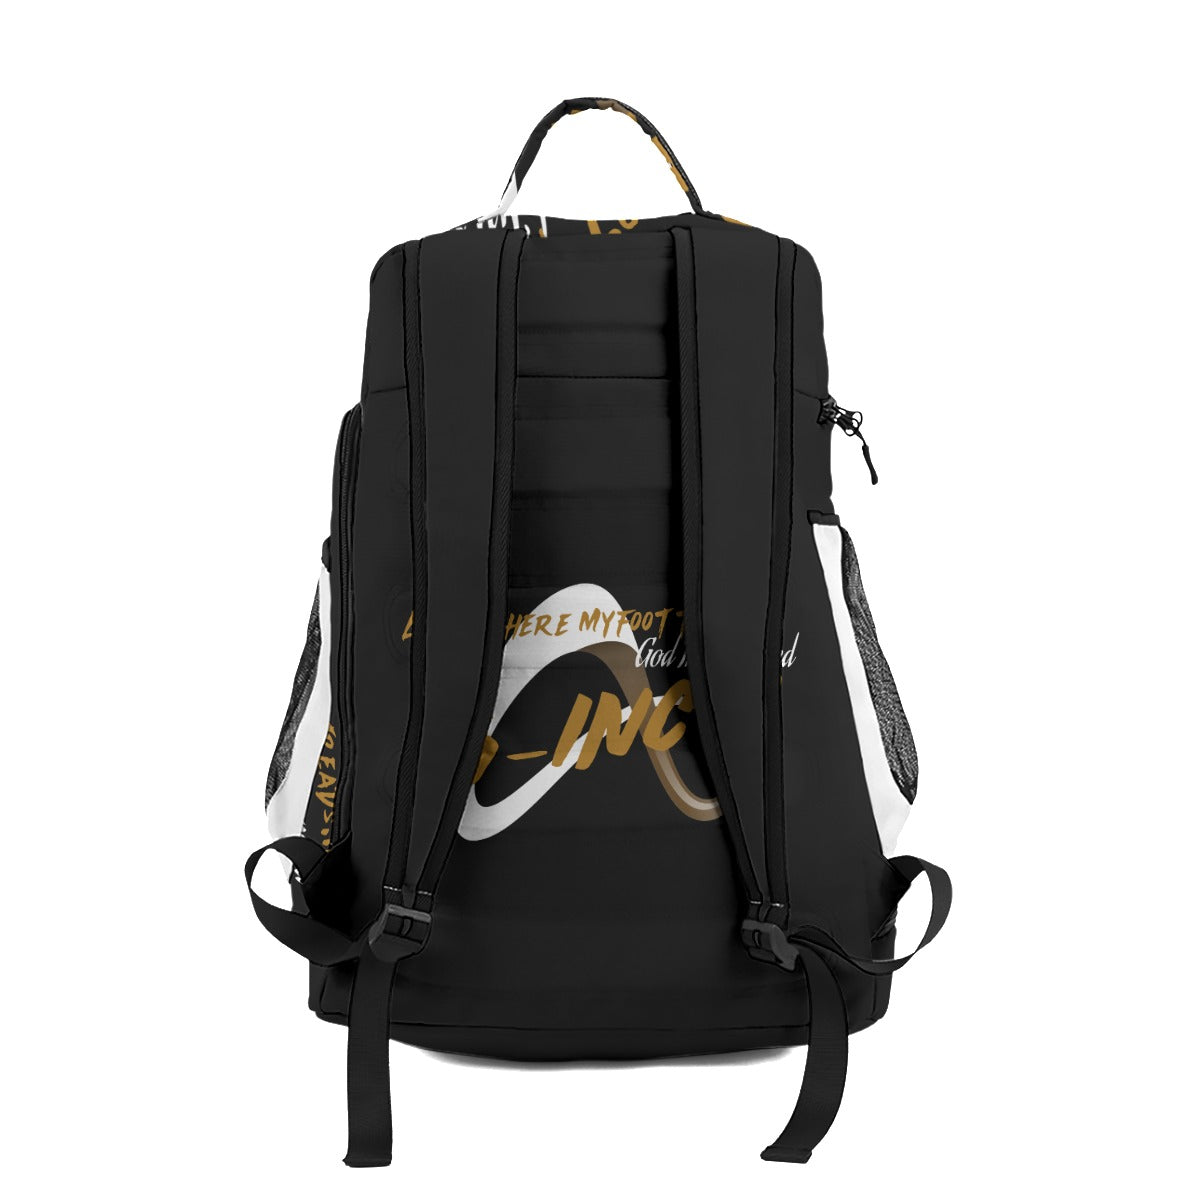 G-Inc'd Multifunctional Backpack